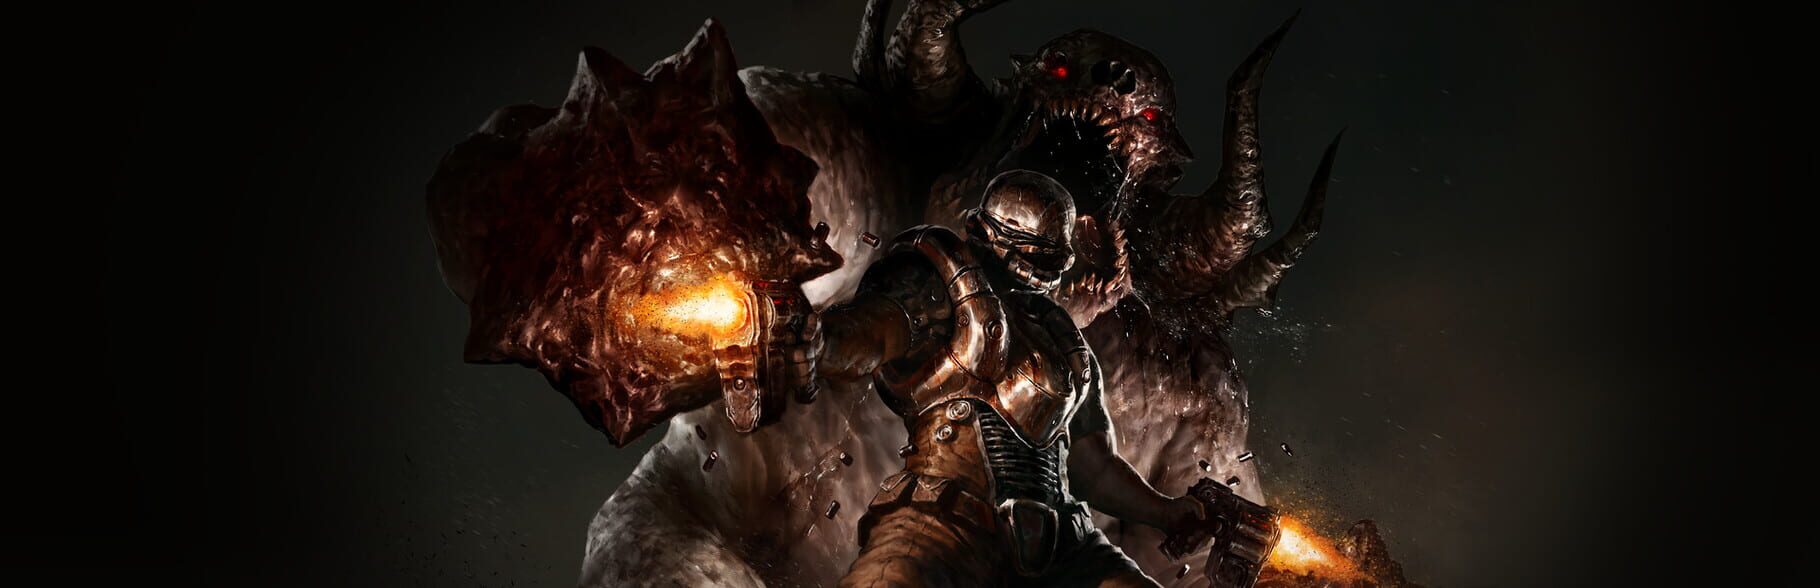 Arte - Doom 3: BFG Edition